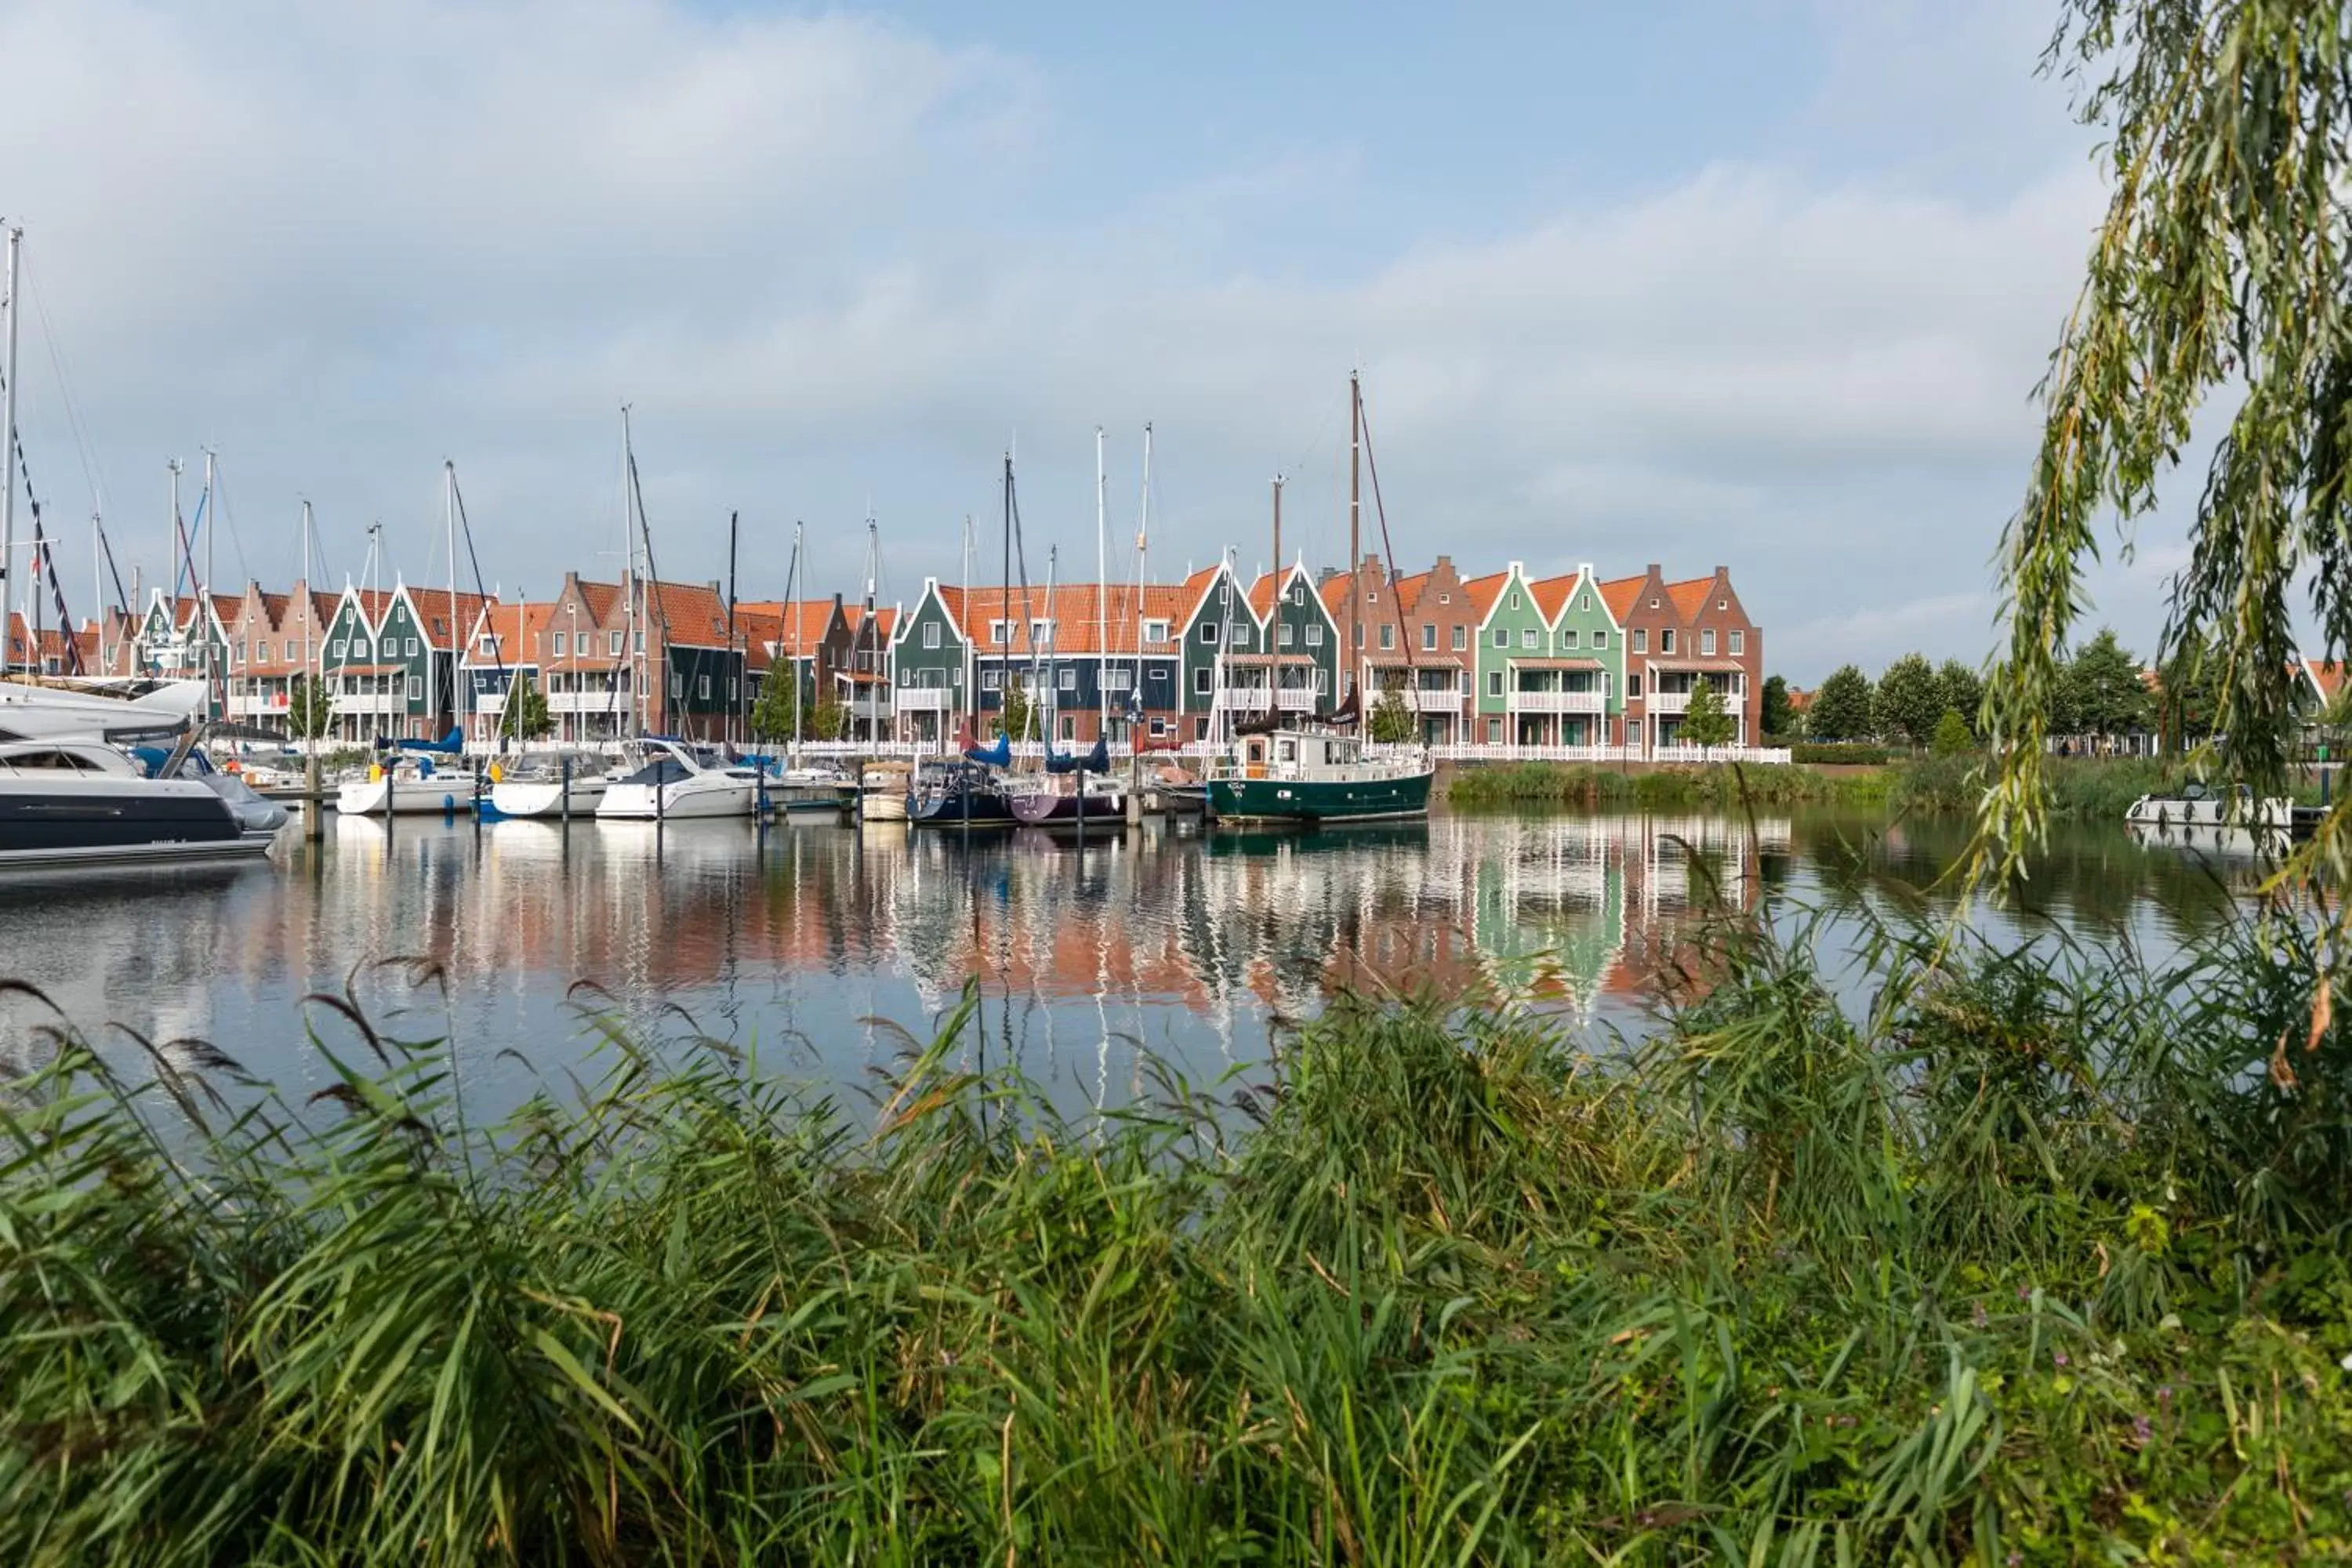 Lake view in Marinapark Volendam